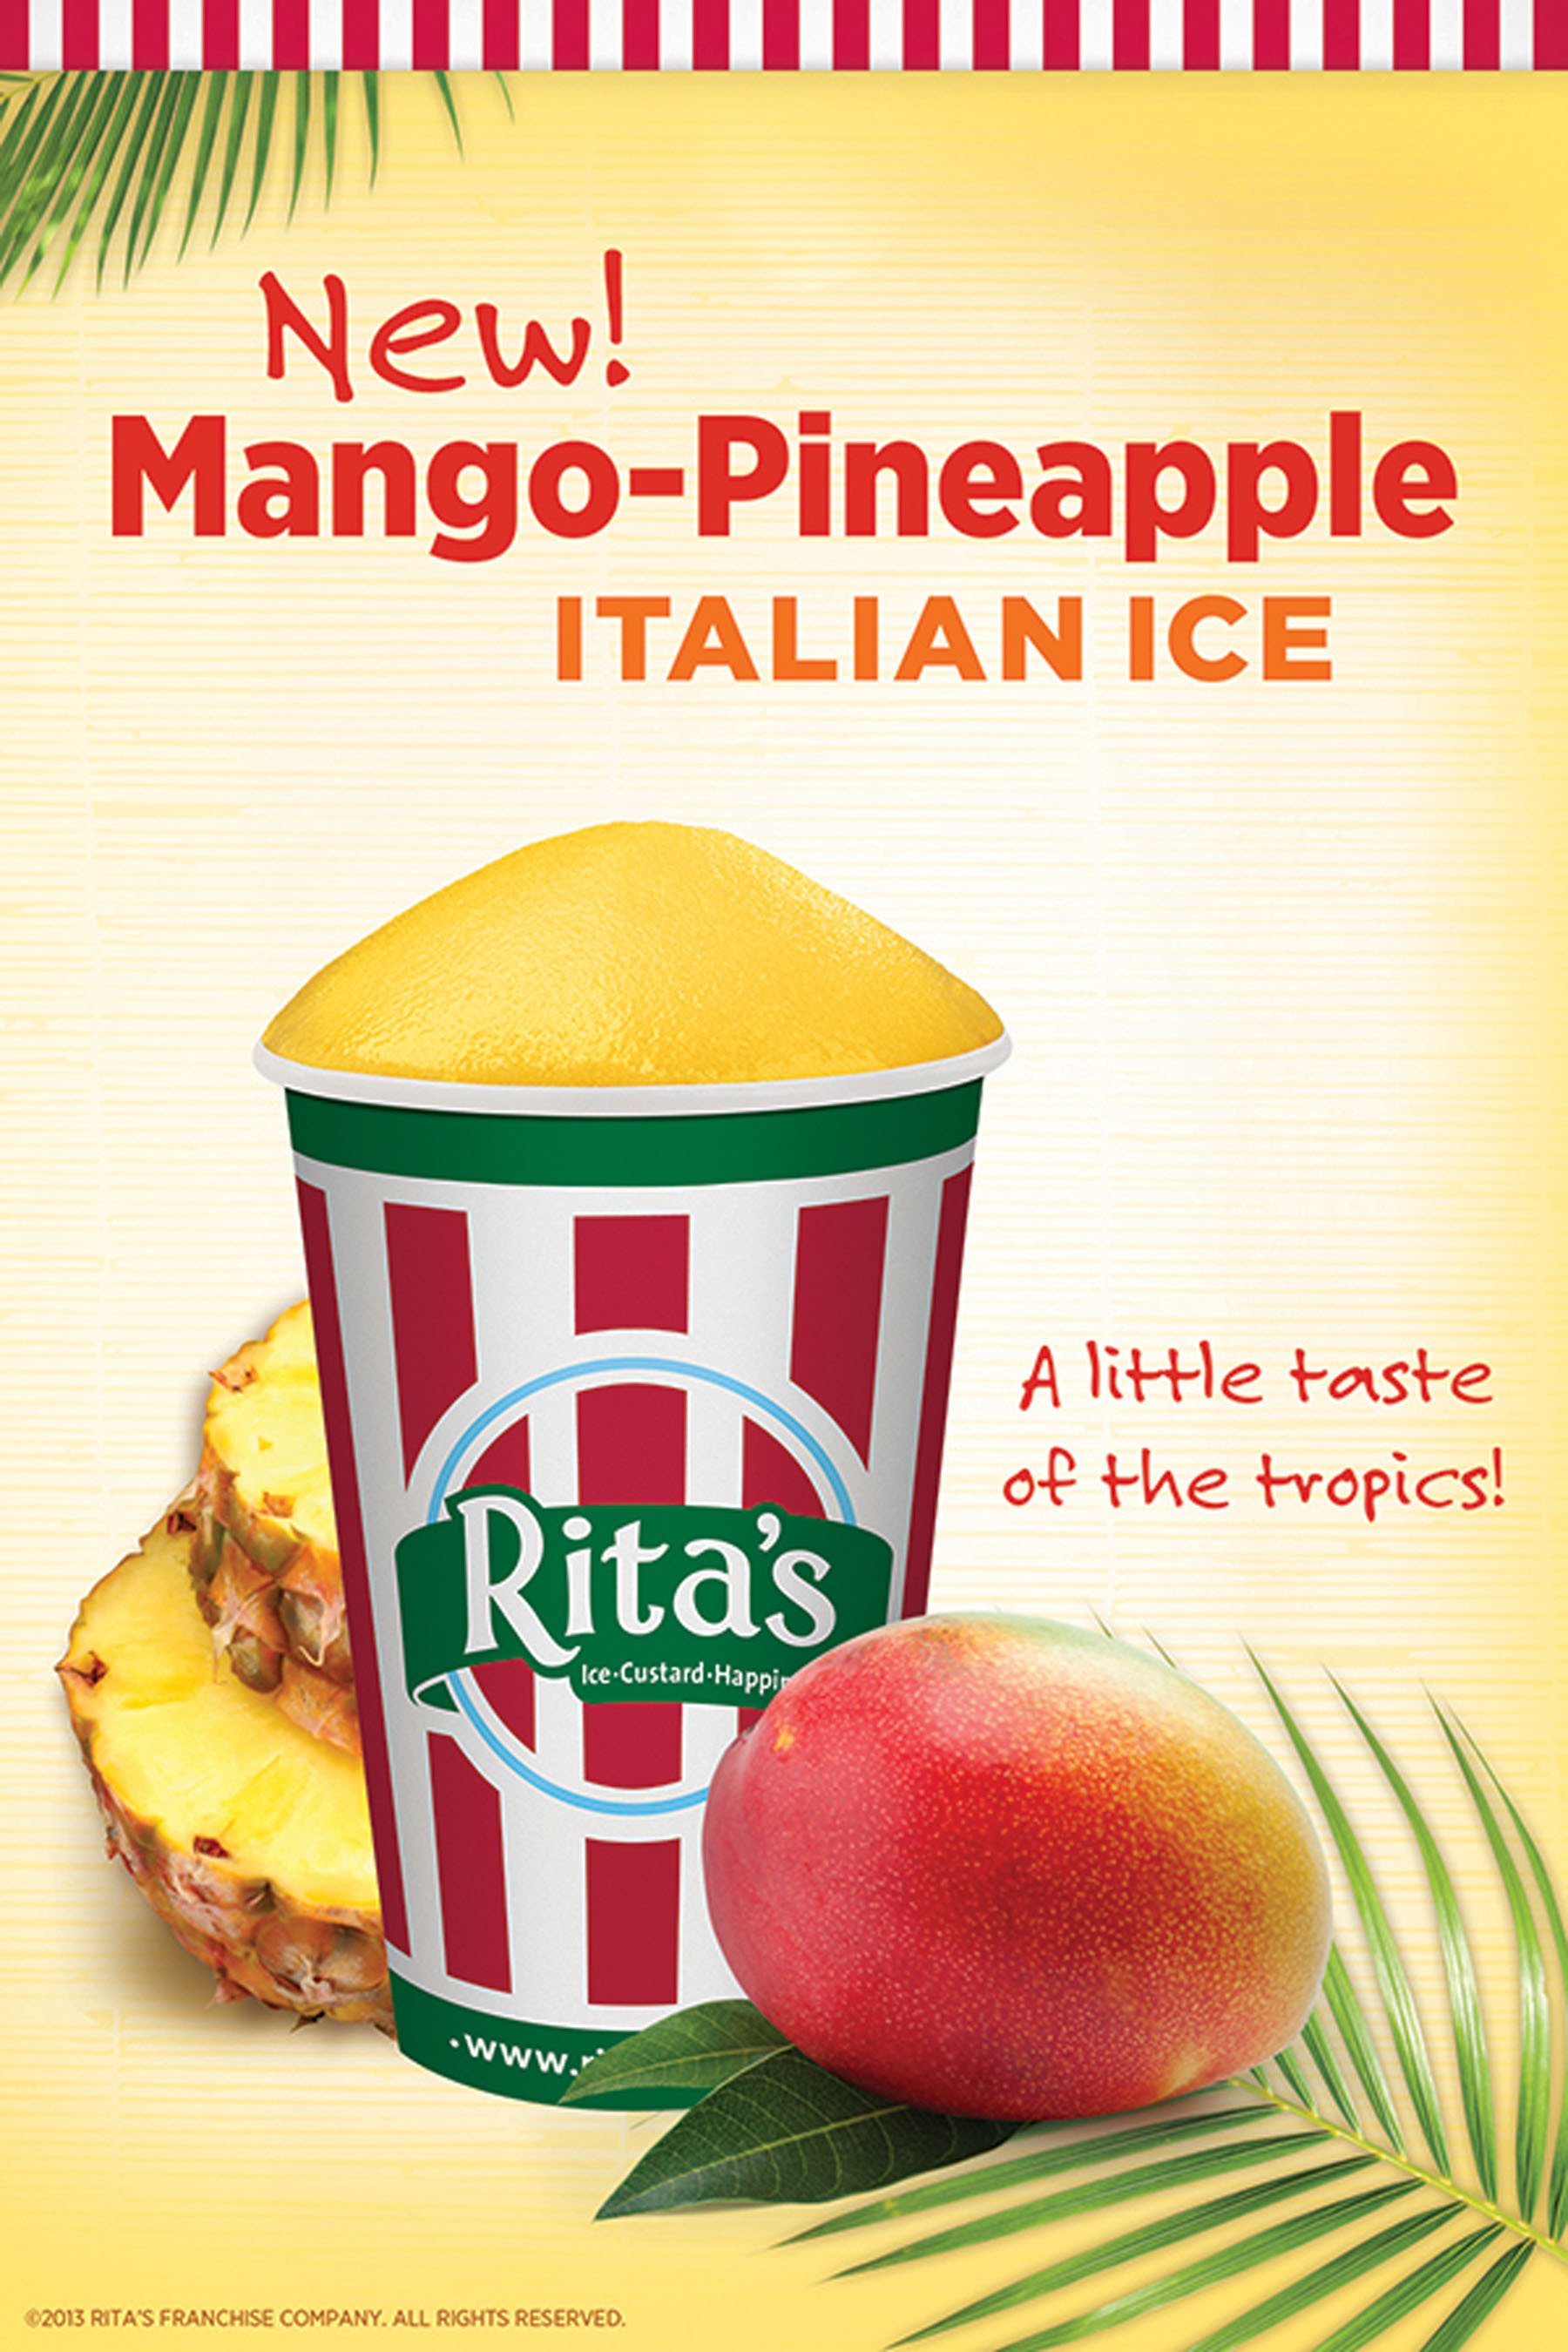 Rita's Italian Ice new Mango-Pineapple Ice. (PRNewsFoto/Rita's Franchise Company) (PRNewsFoto/RITA'S FRANCHISE COMPANY)